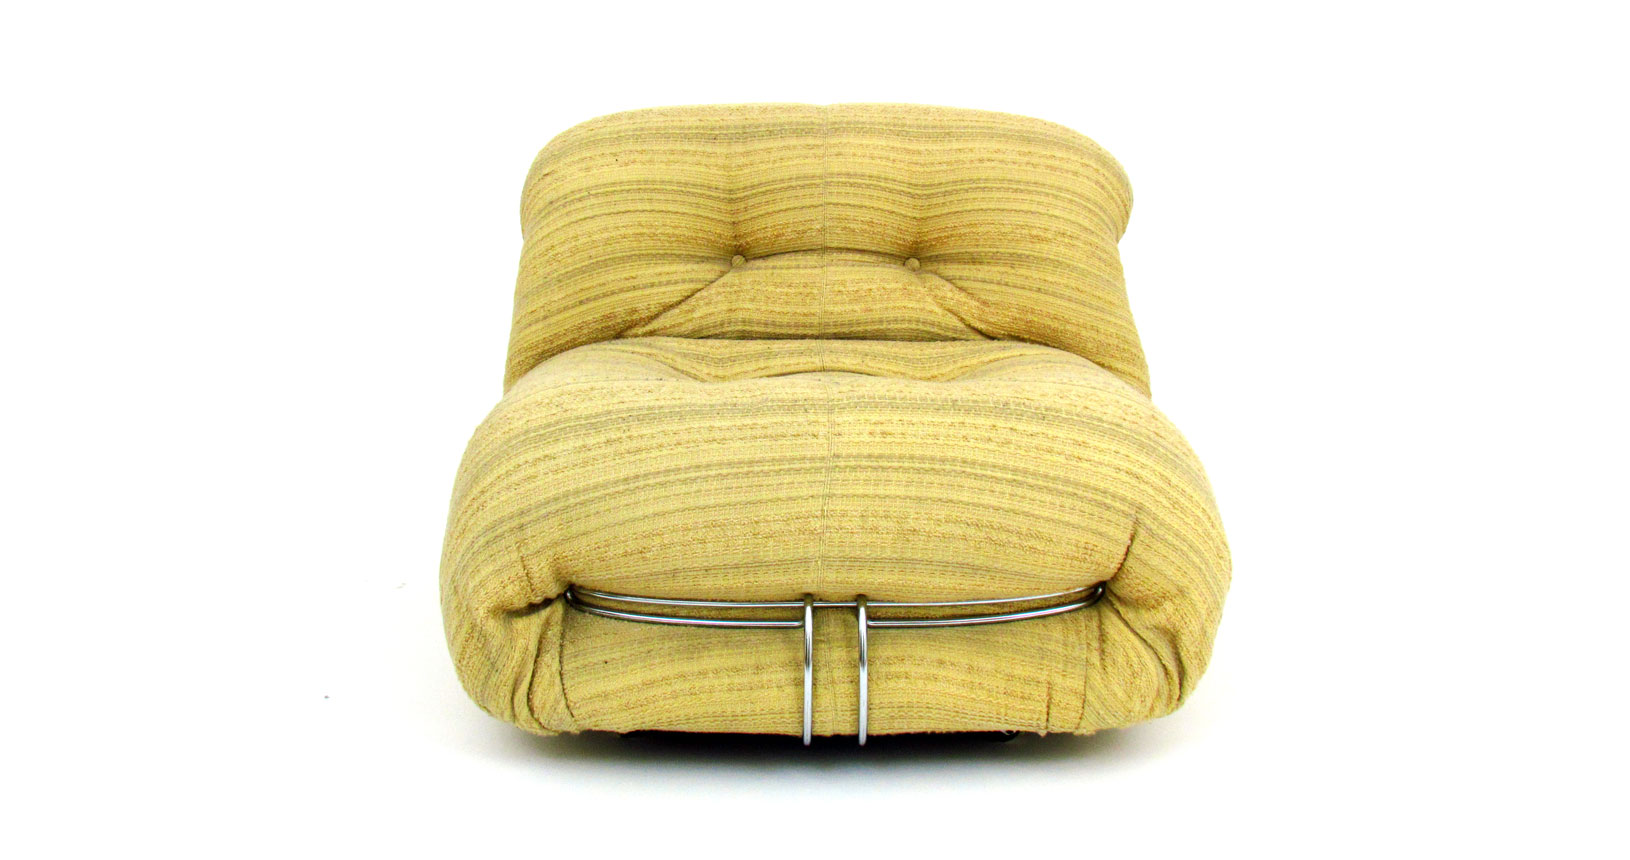 soriana armchair afra tobia scarpa poltrona tessuto fabric cassina vintage design